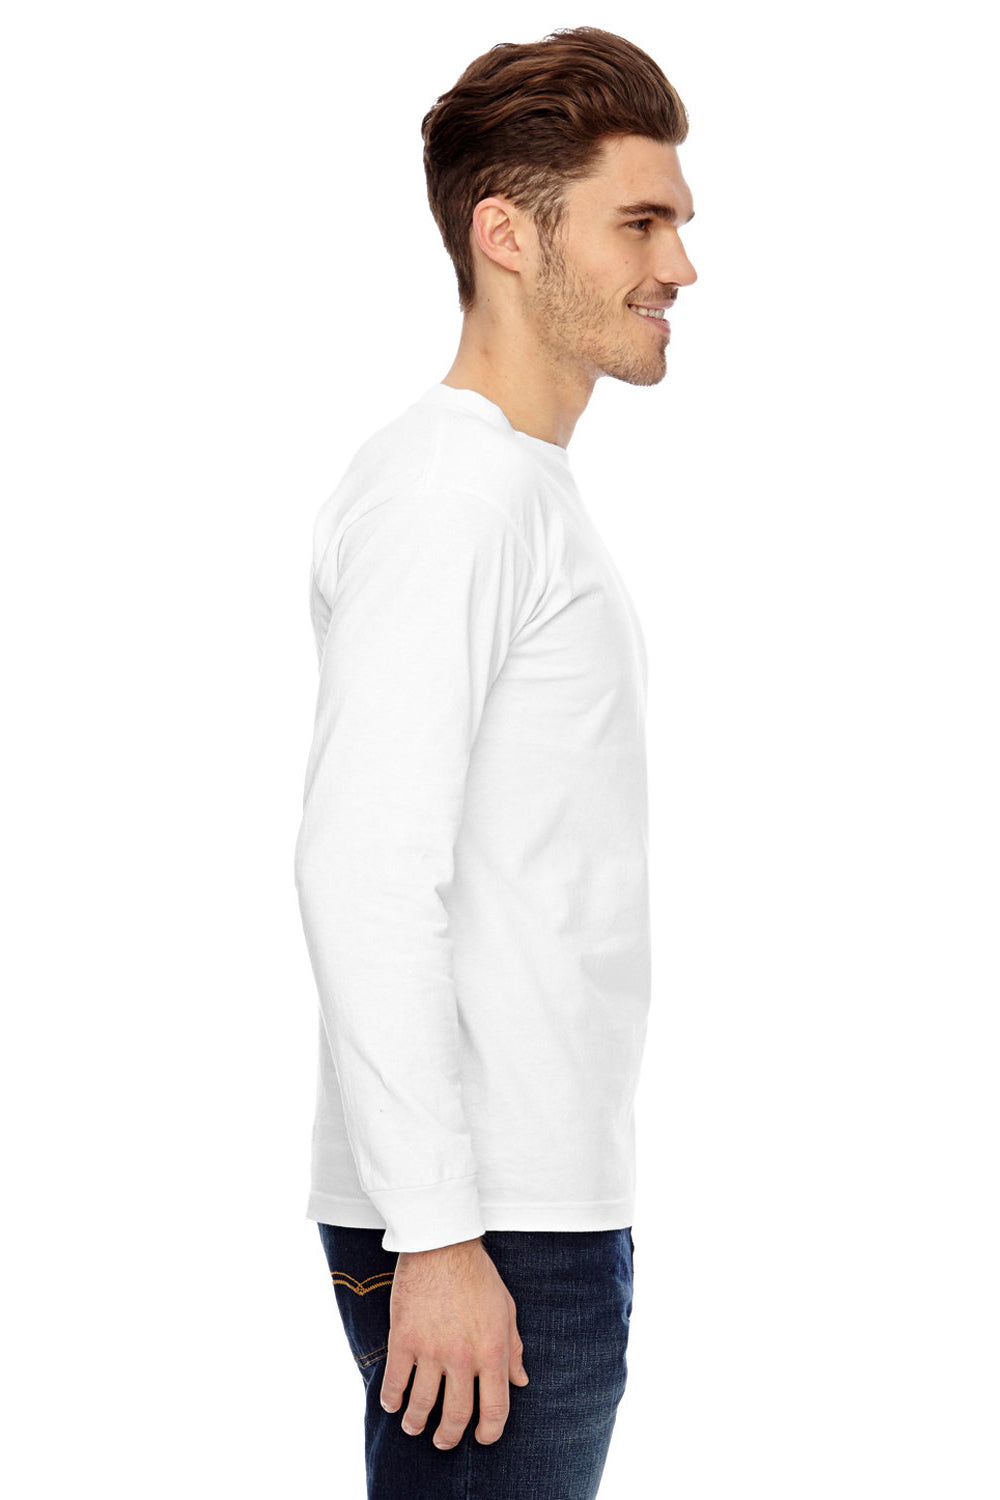 Bayside BA6100 Mens USA Made Long Sleeve Crewneck T-Shirt White Model Side